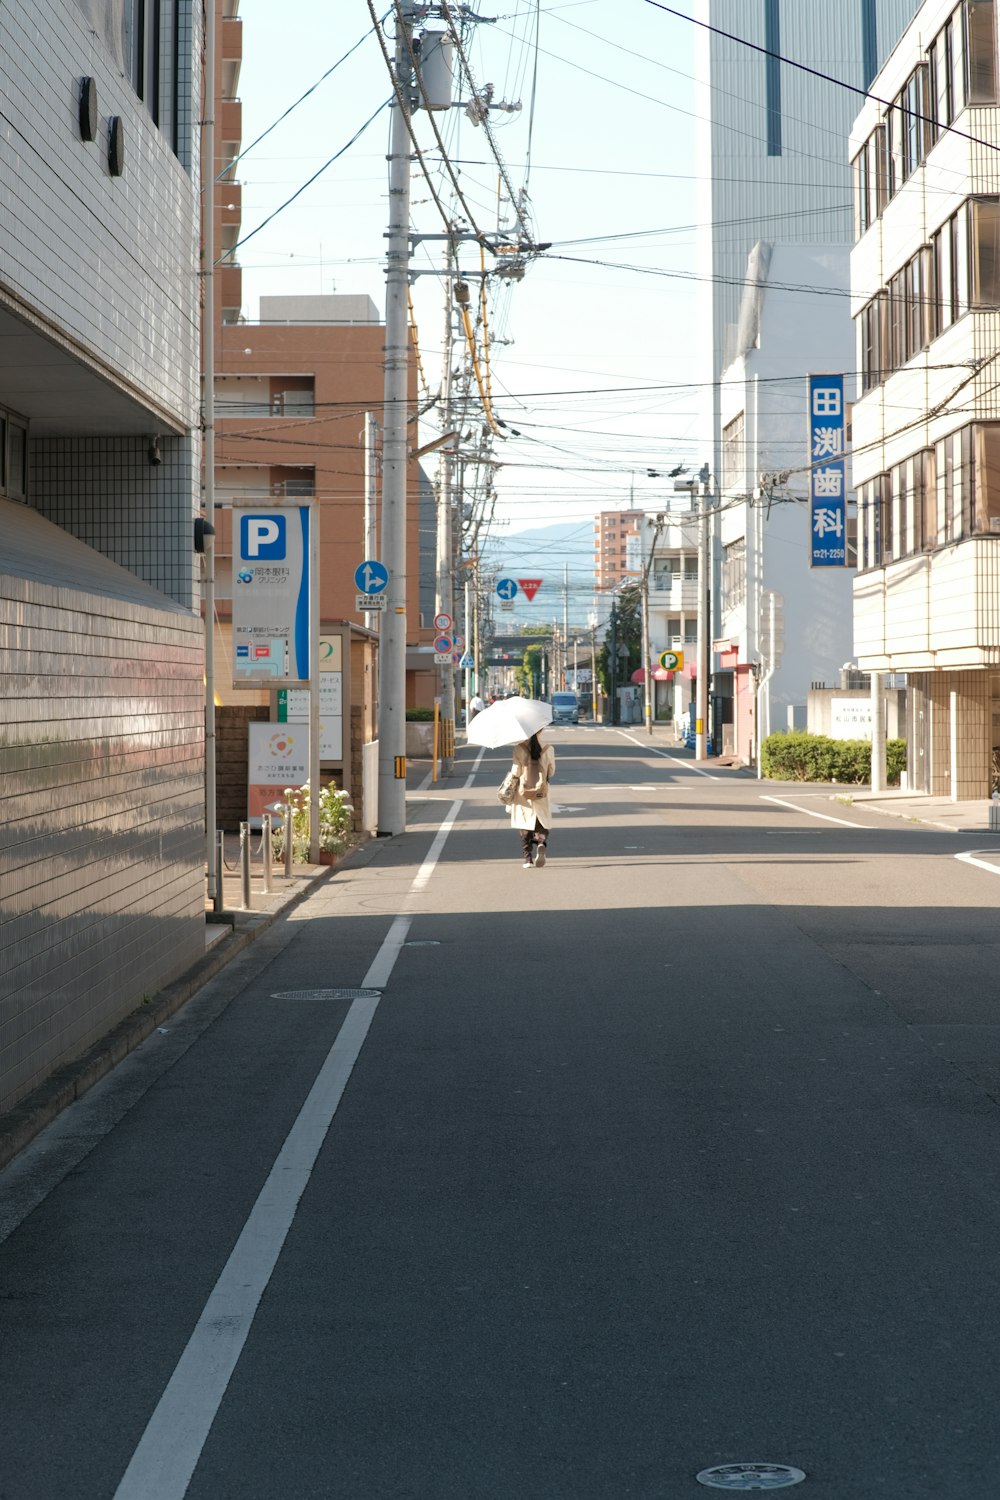 a person riding a skateboard down a street